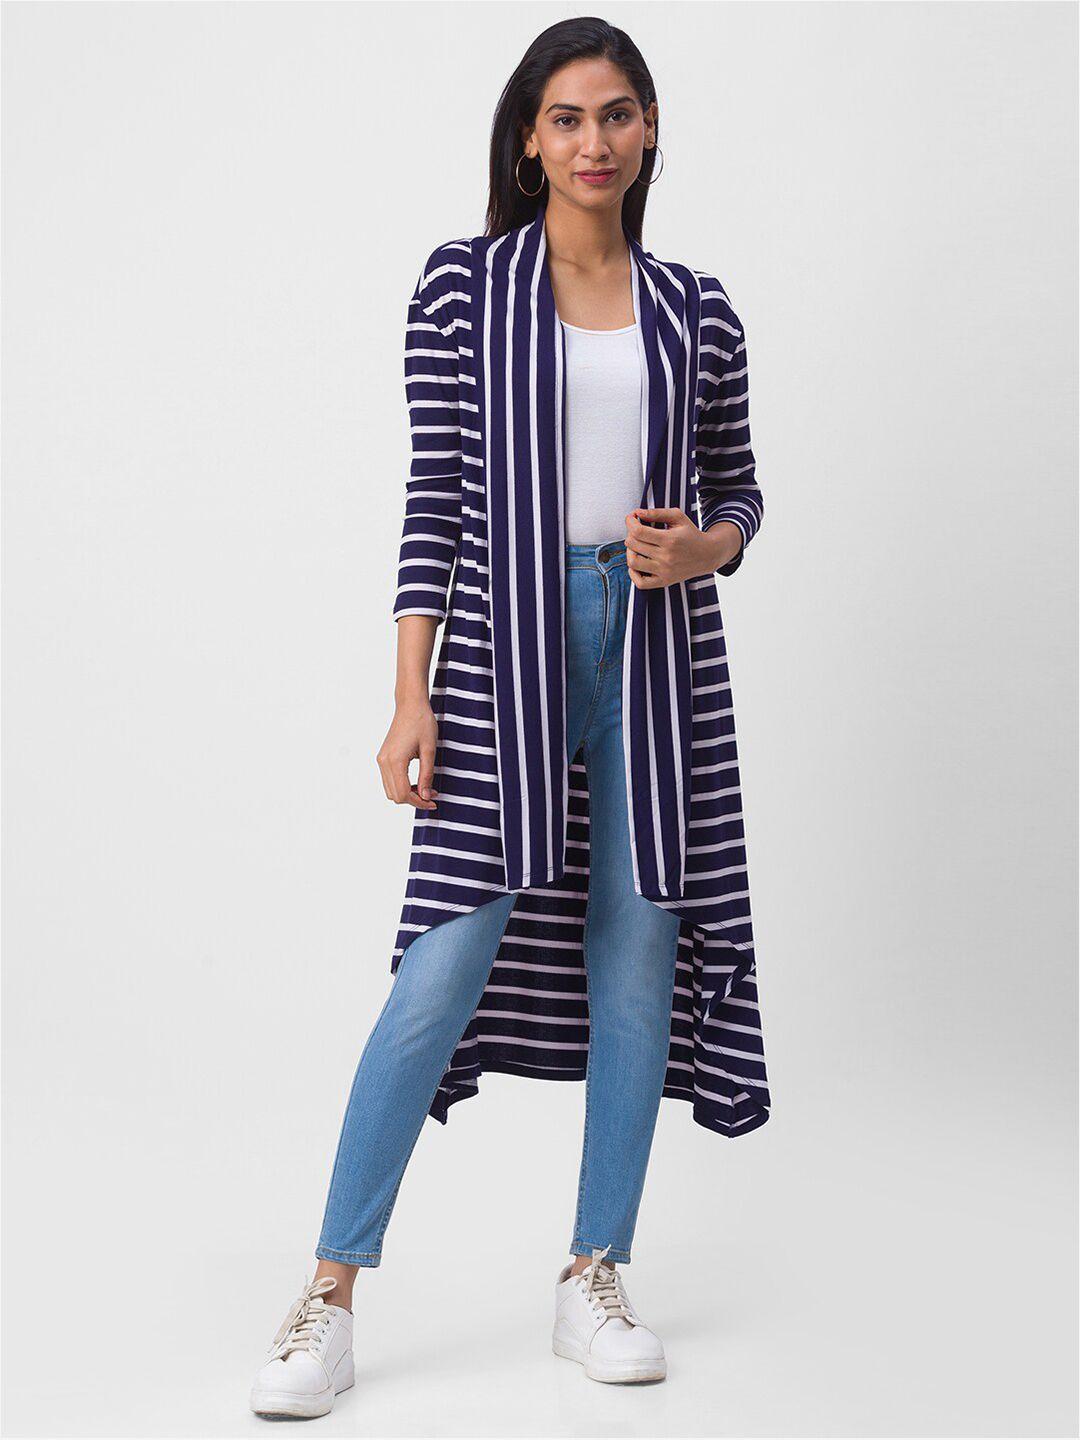 globus women navy blue & white striped longline shrug